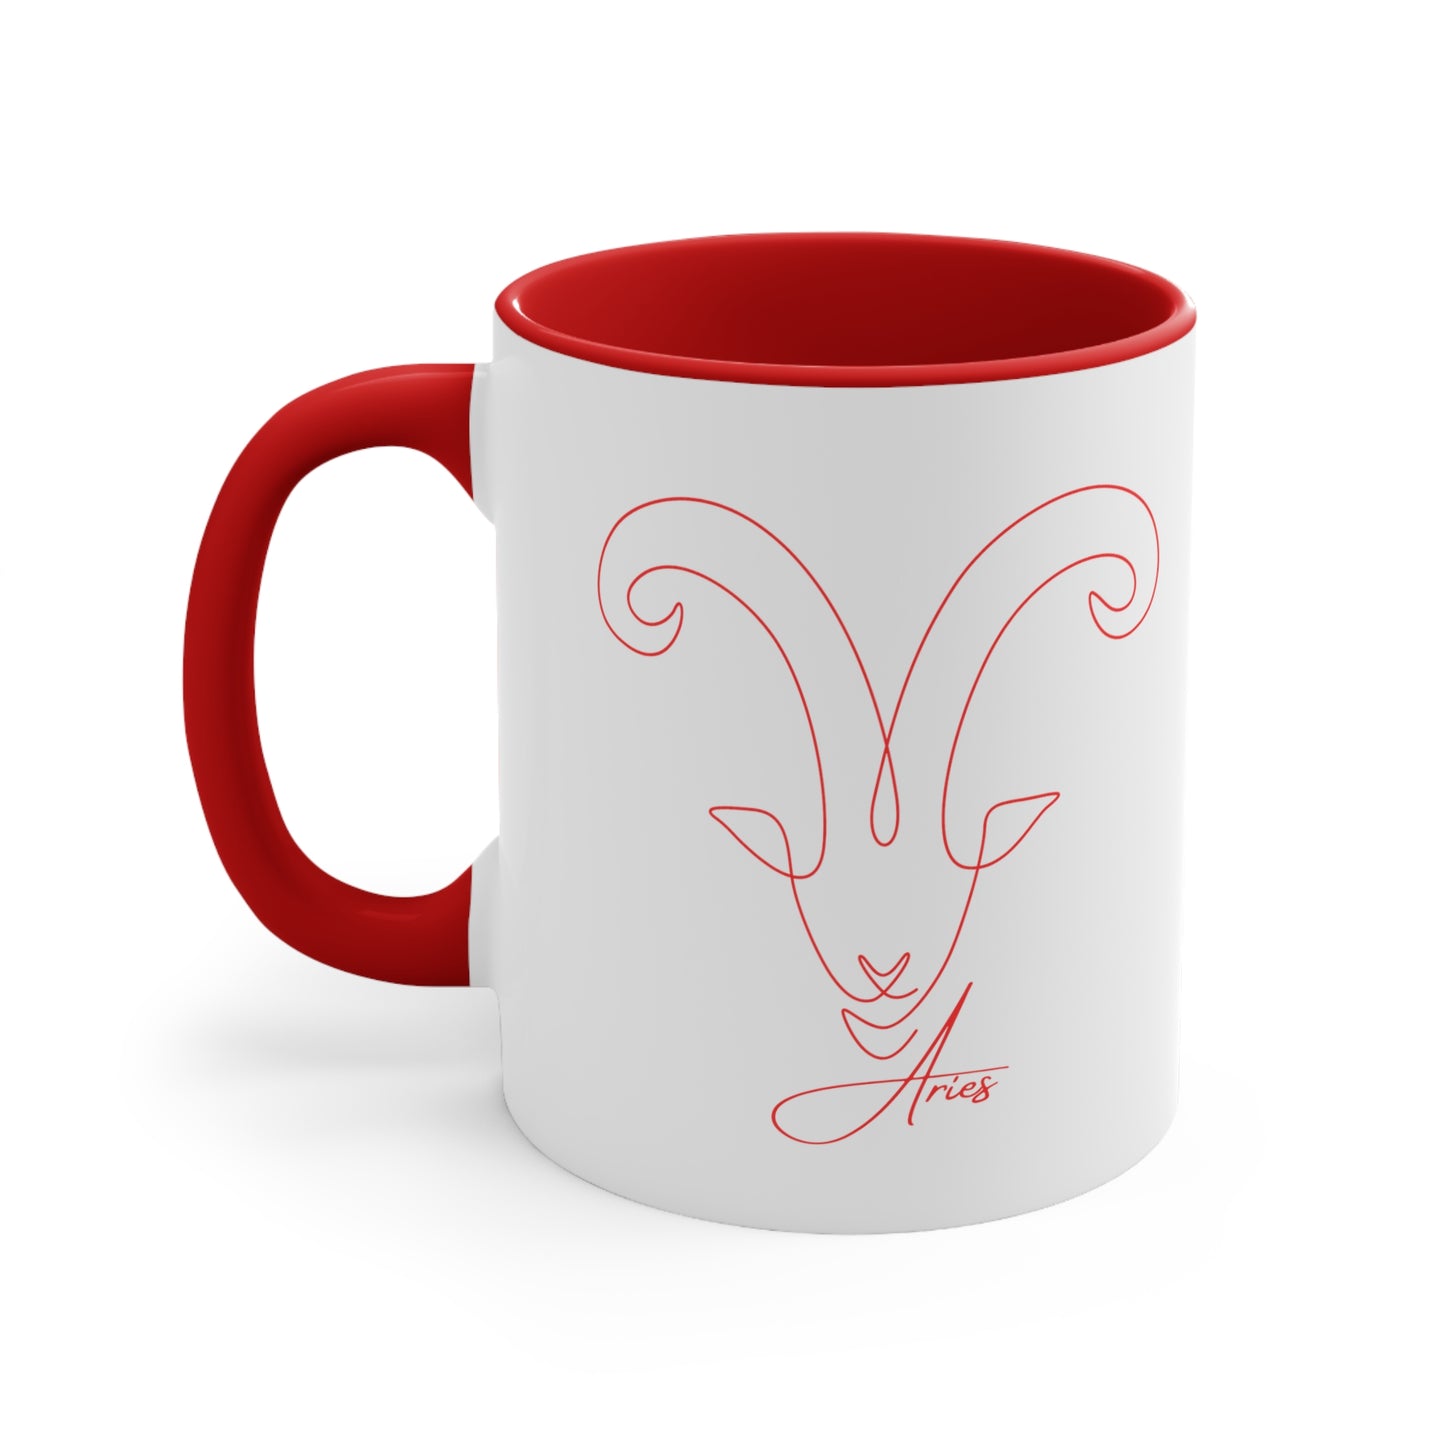 Abstract Aries coffee mug